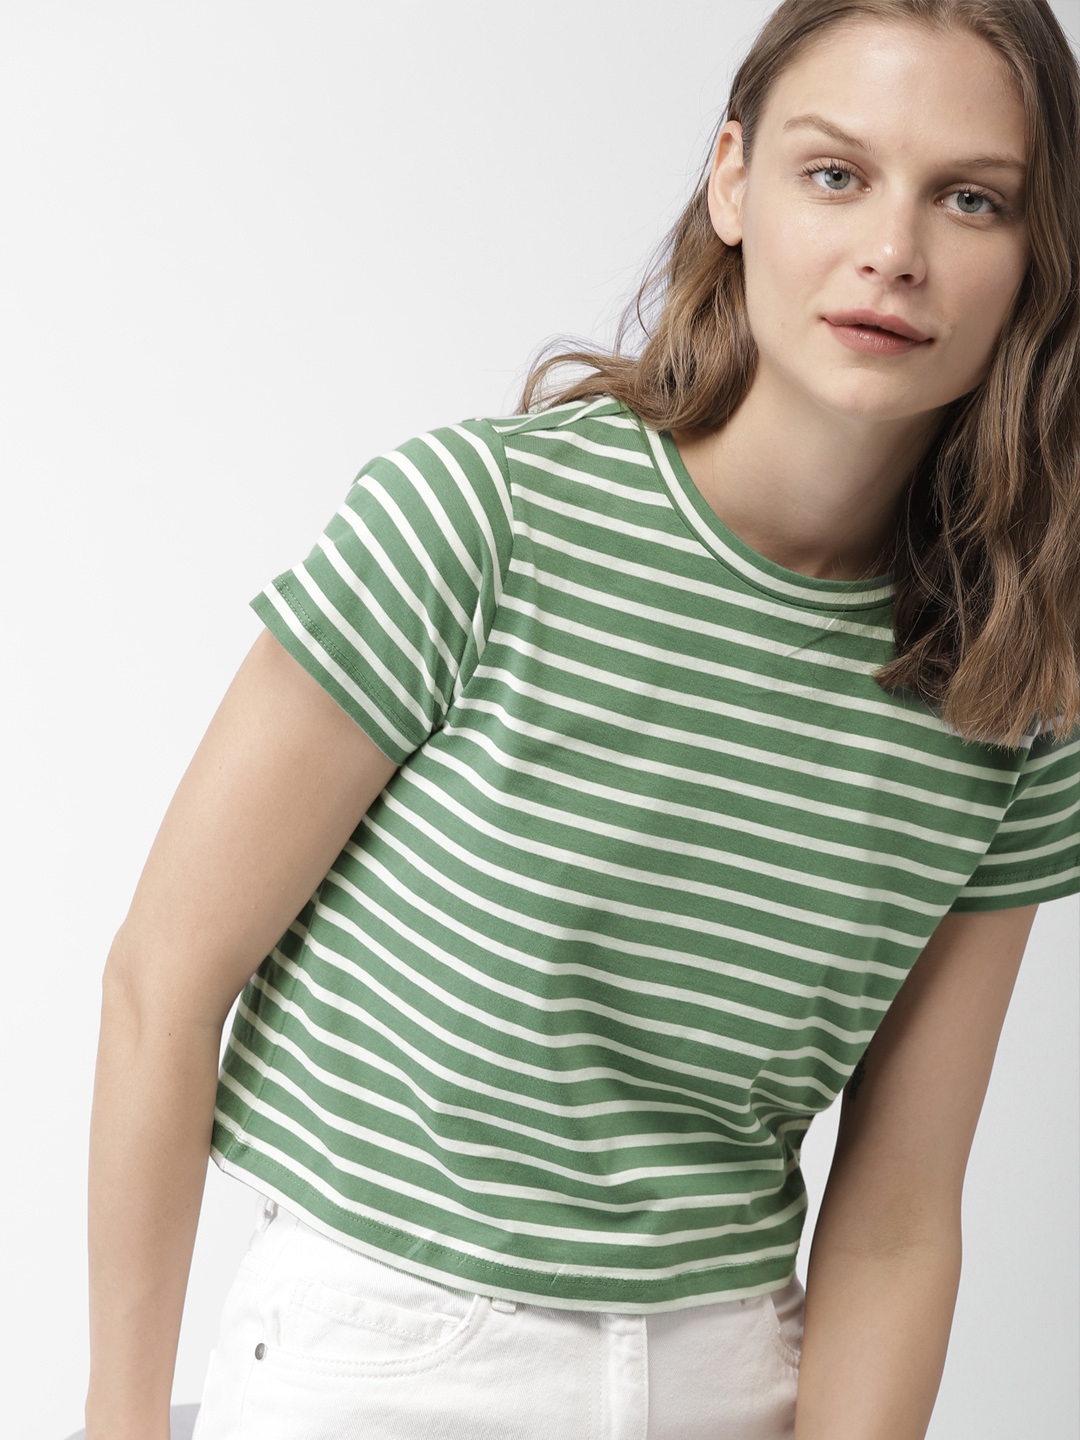 Buy Mast & Harbour Women Green & White Striped T Shirt Dress